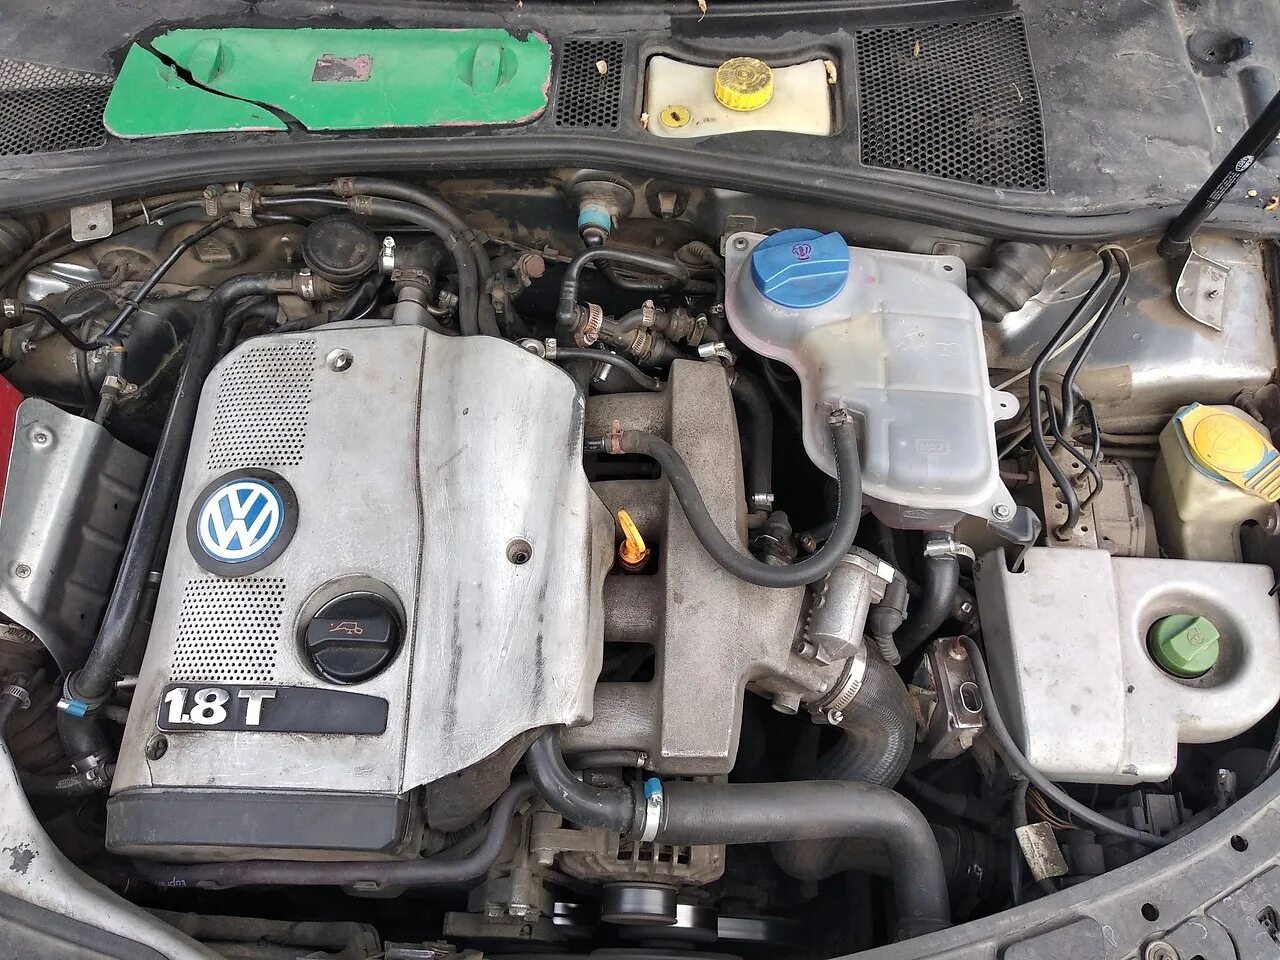 Фольксваген Пассат б5 1.8 турбо. B5 Фольксваген 1.8 турбо. Двигатель Volkswagen Passat b5 1.8 t. Фольксваген Пассат 1.8т b5. Купить двигатель пассат б5 1.8 турбо